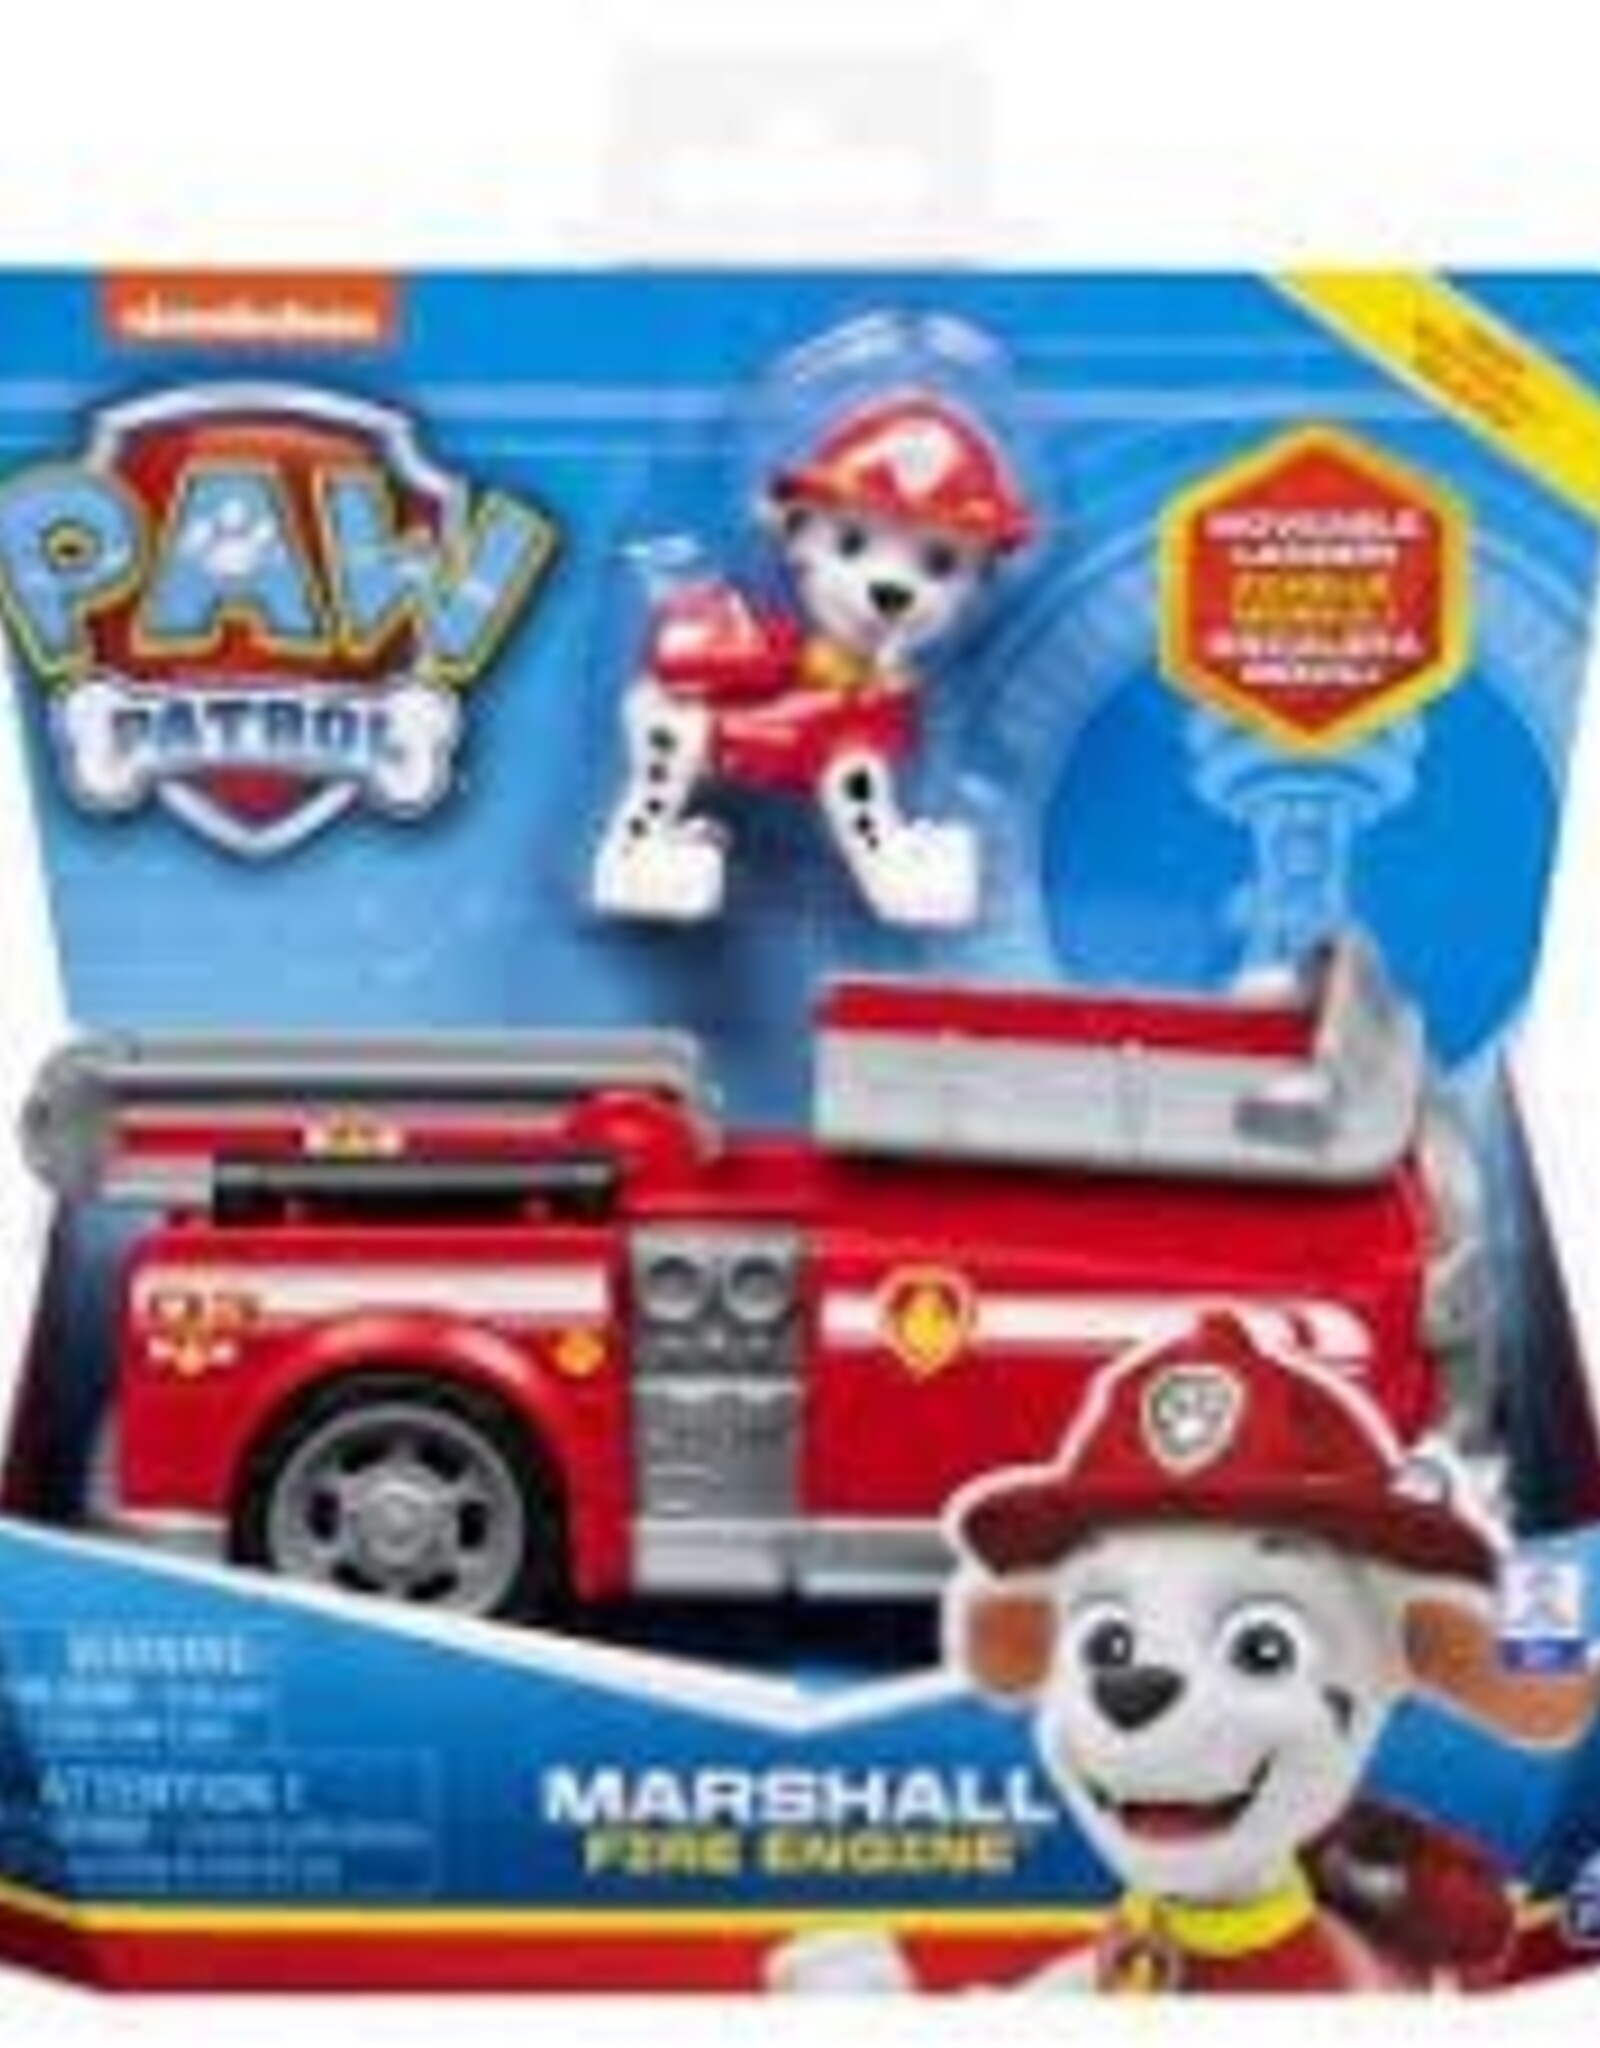 Gund/Spinmaster PAW Patrol, Marshall`s Fire Engine Vehicle